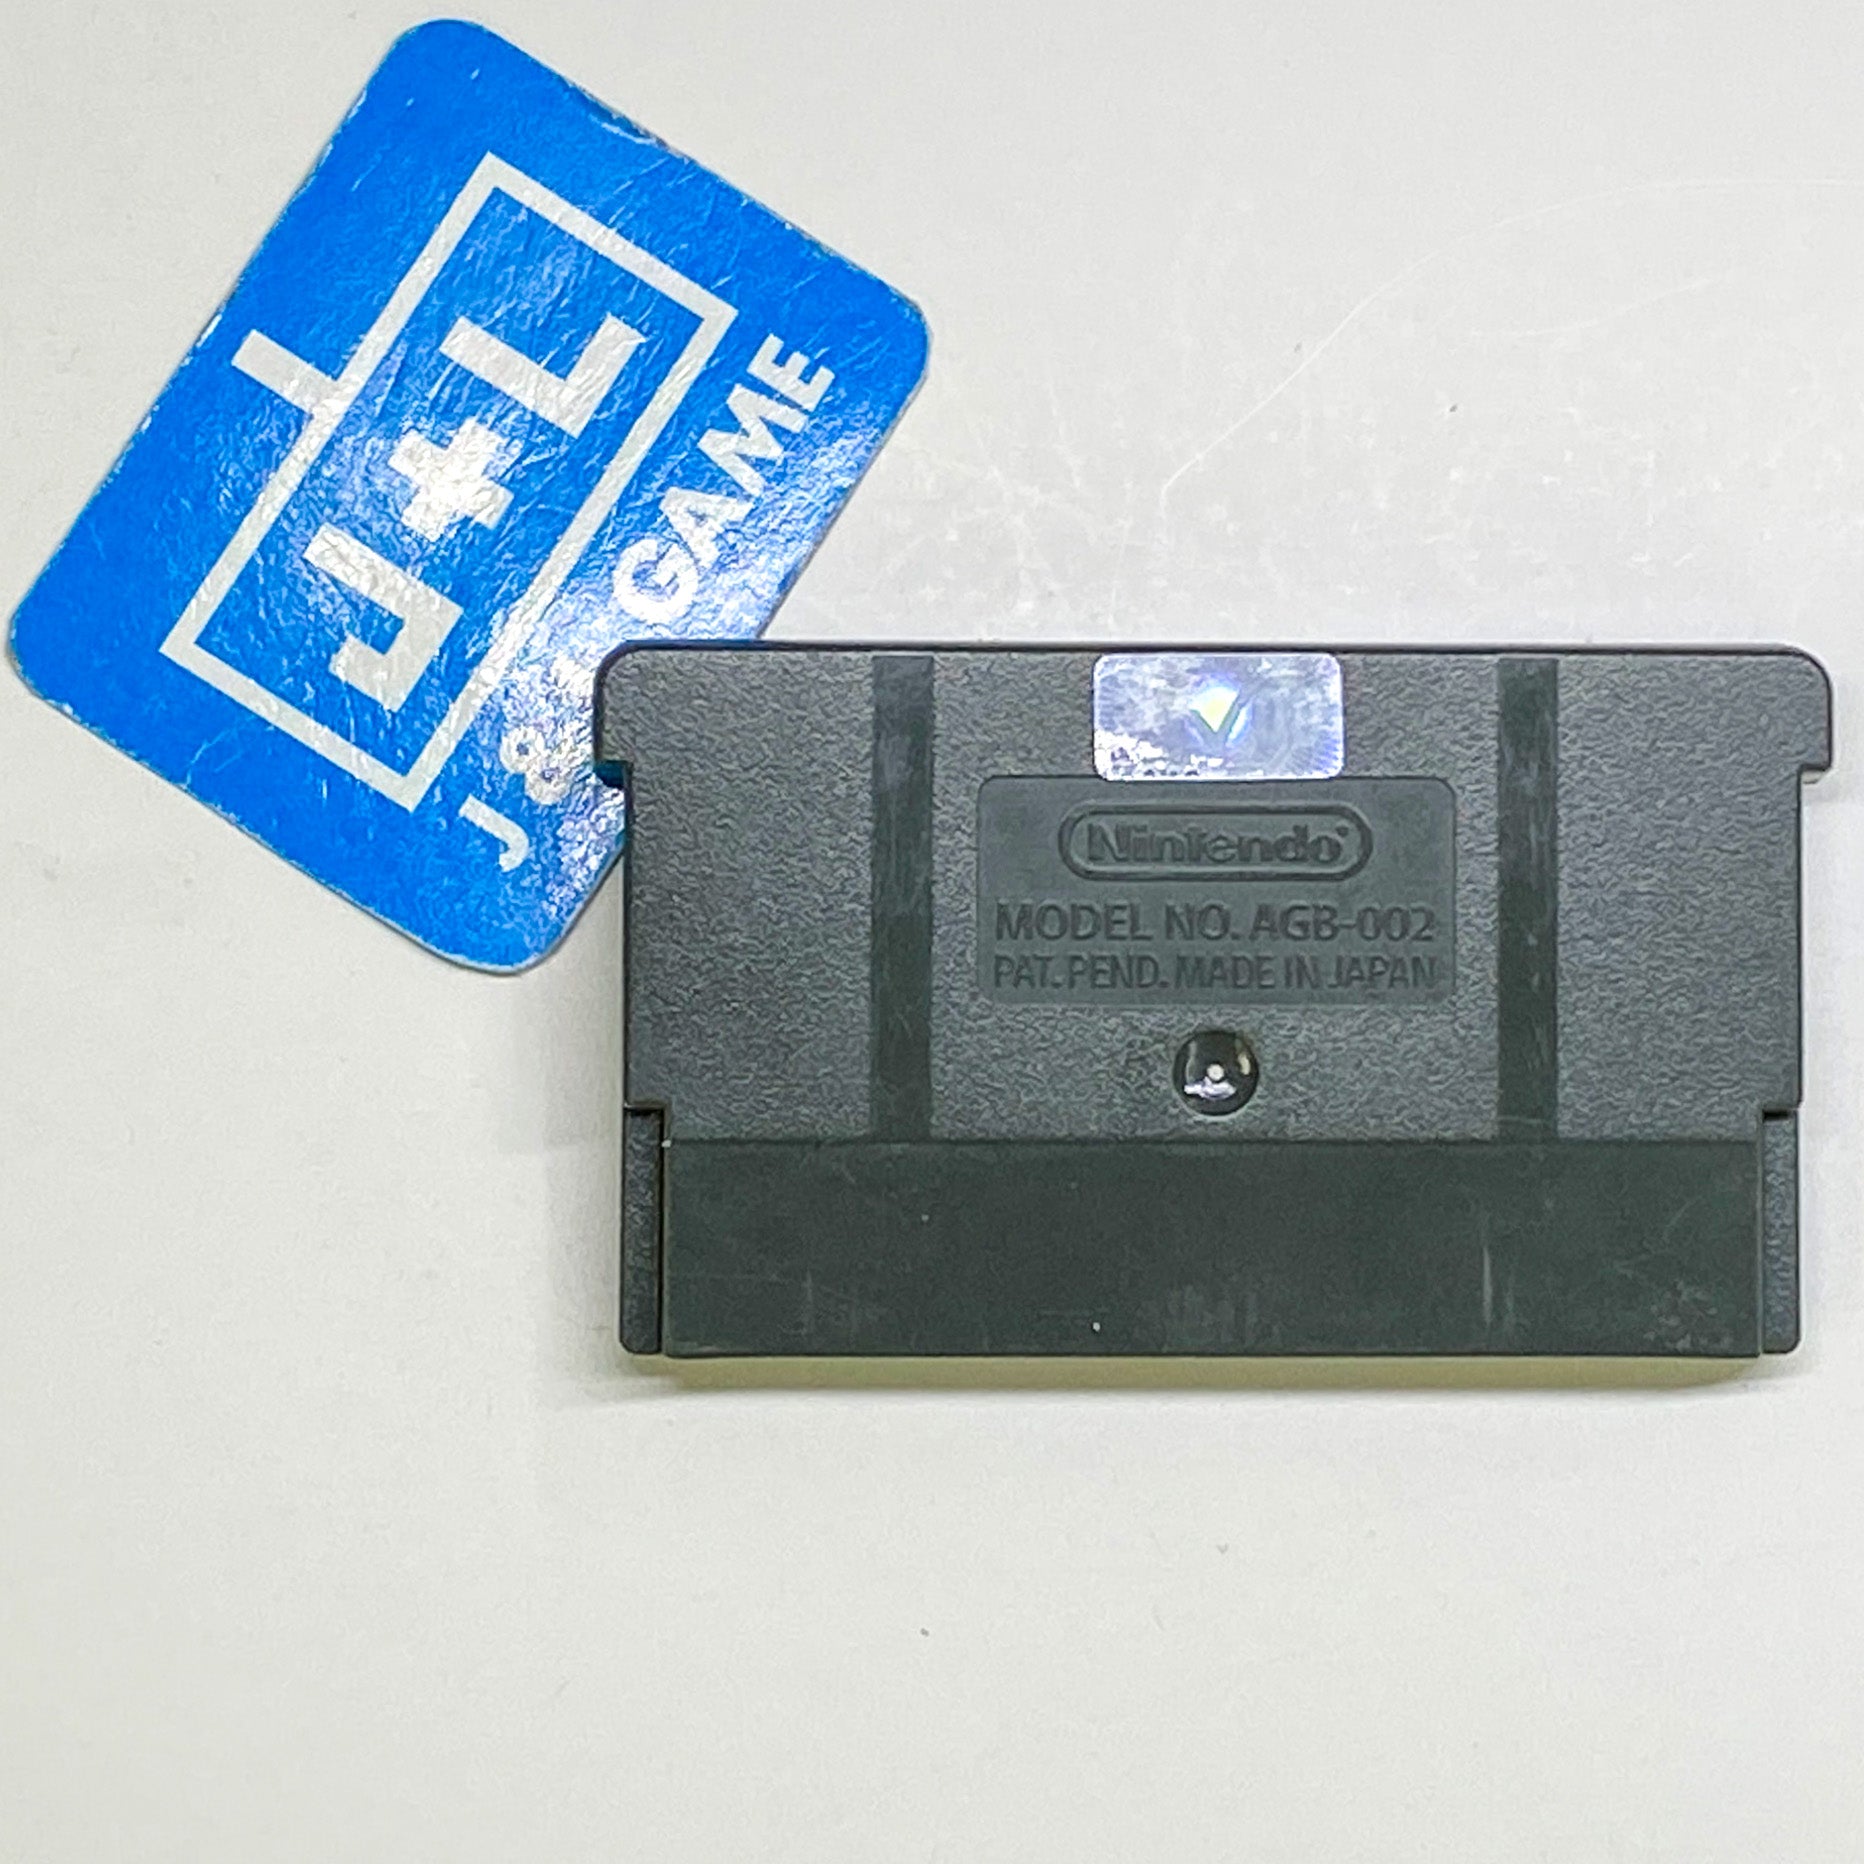 WinX Club - (GBA) Game Boy Advance [Pre-Owned] Video Games Konami   